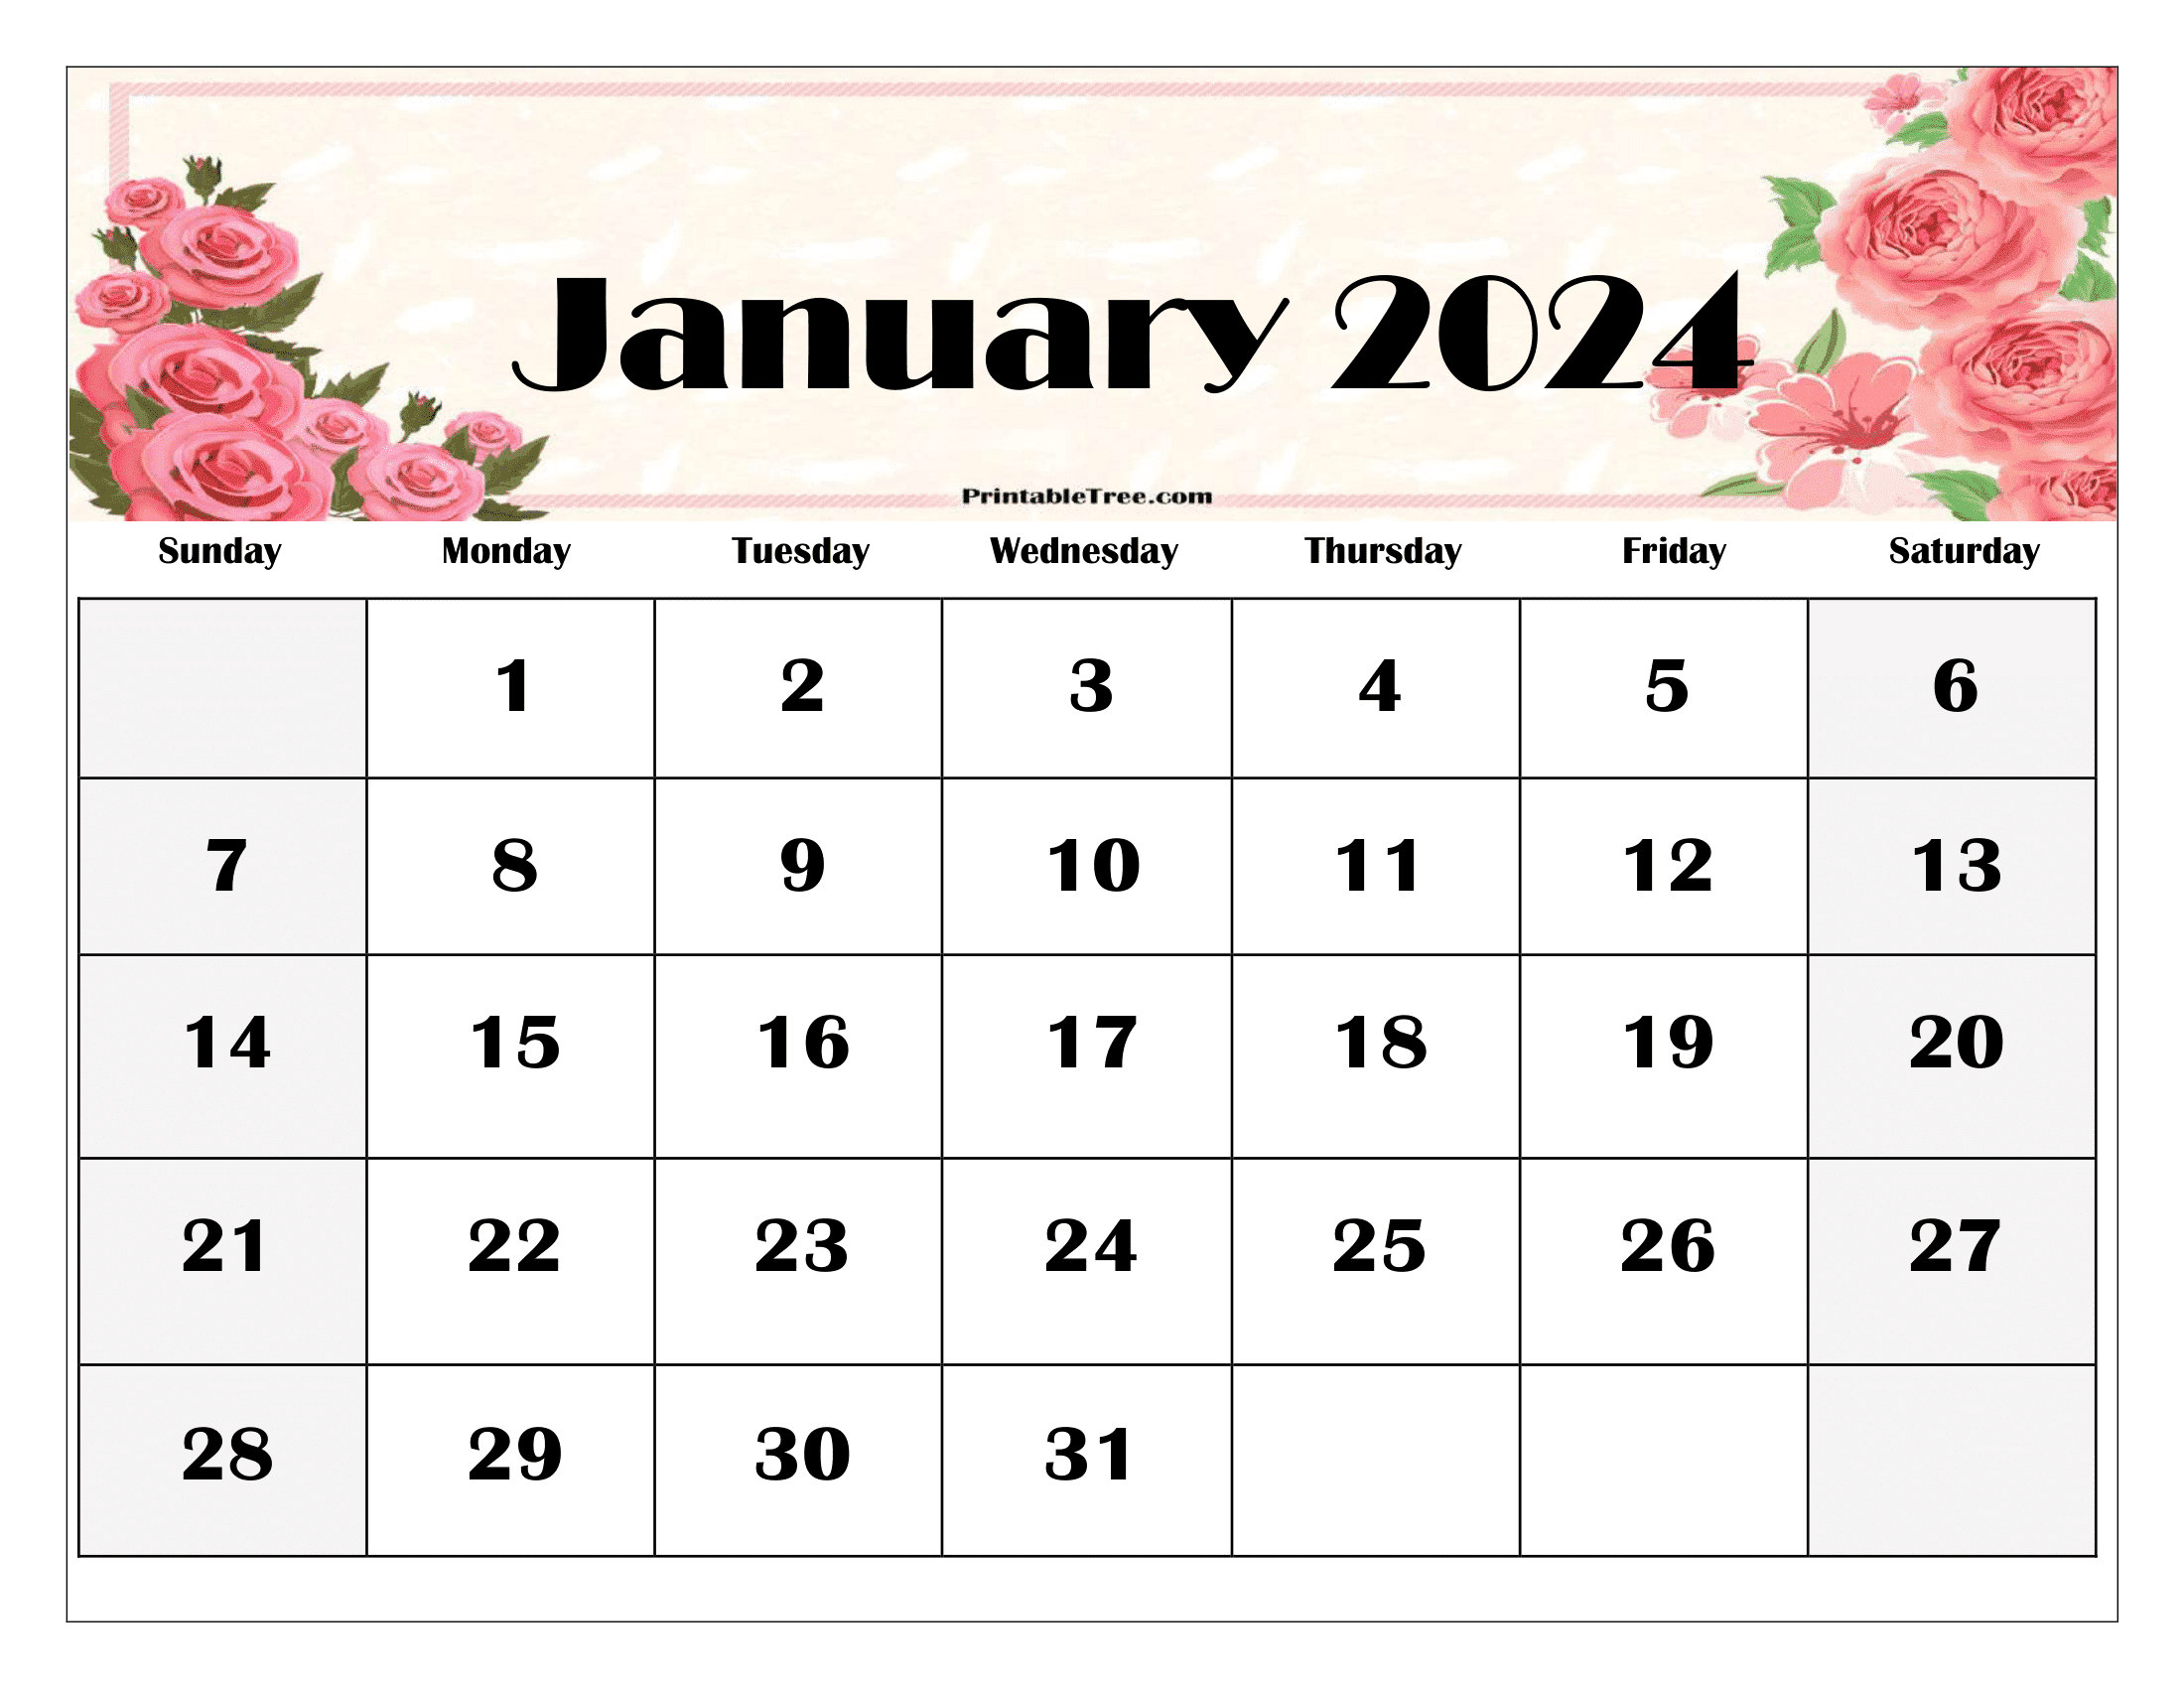 January 2024 Floral Calendar Printable